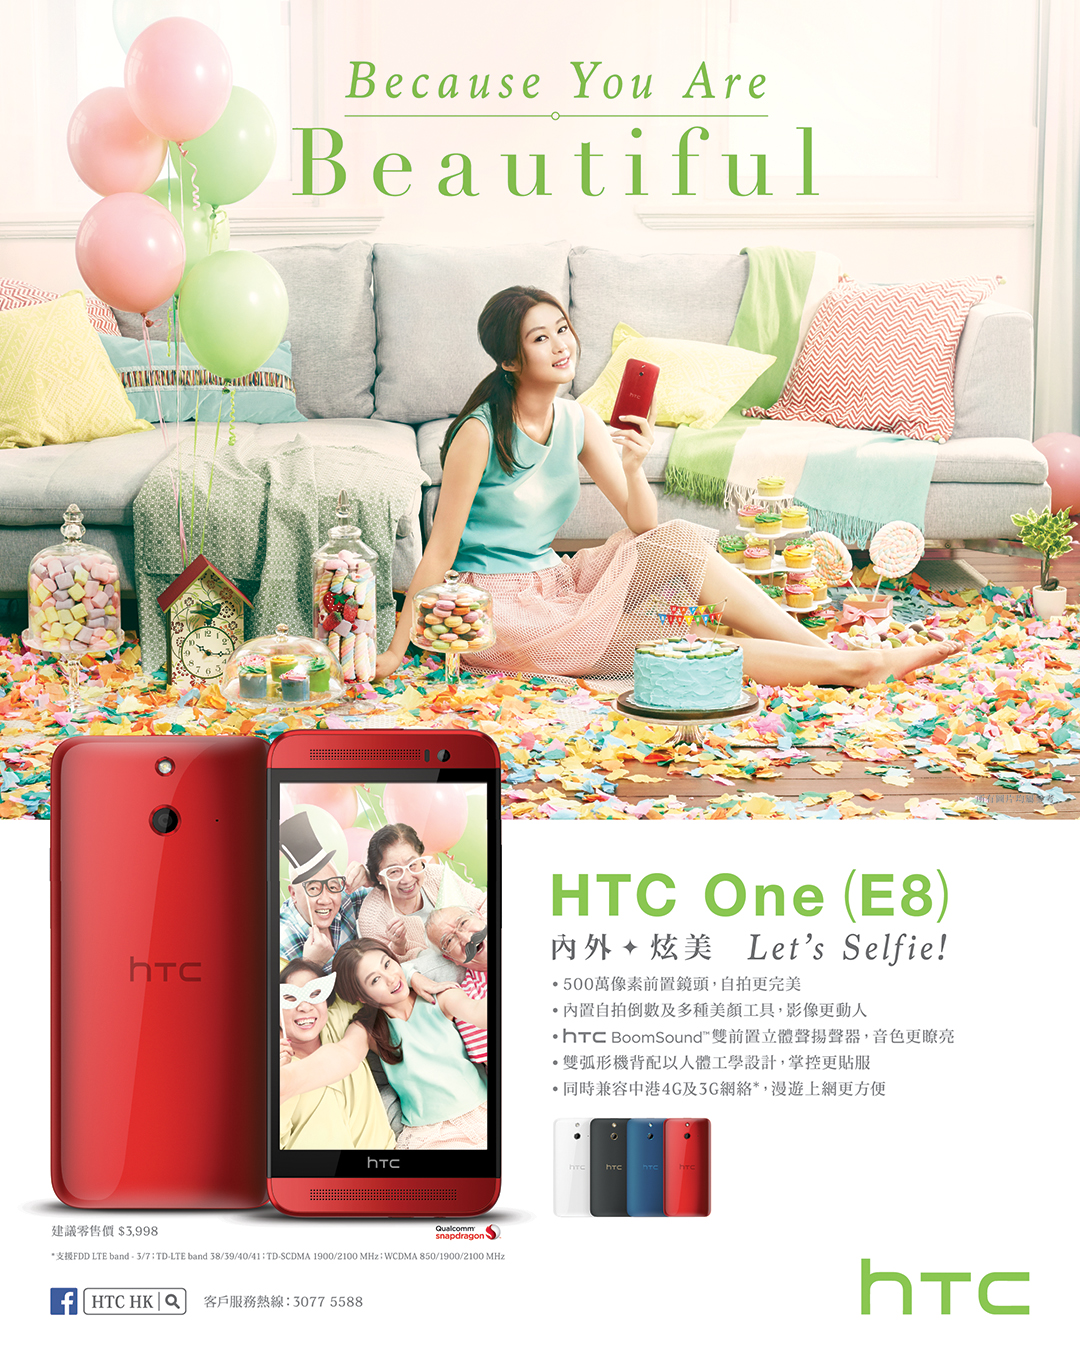 HTC to offer selfie tutorials as part of new branding journey